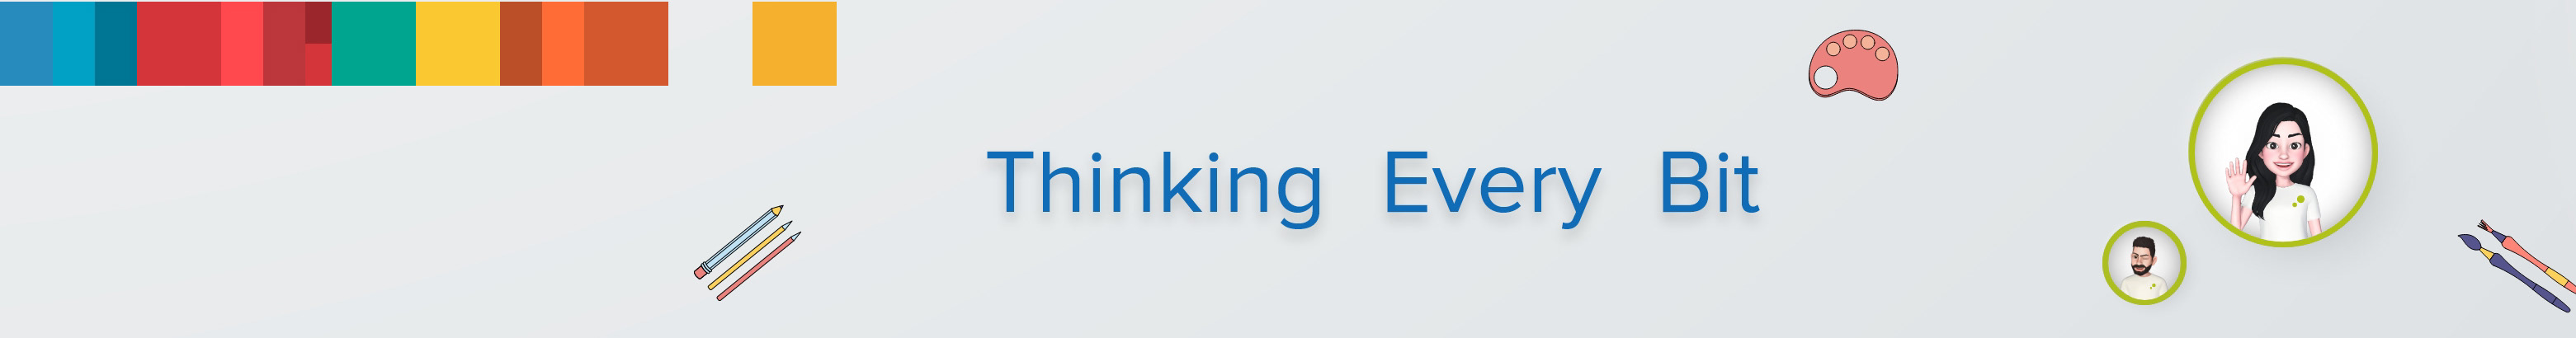 Thinkitive Technologies's profile banner